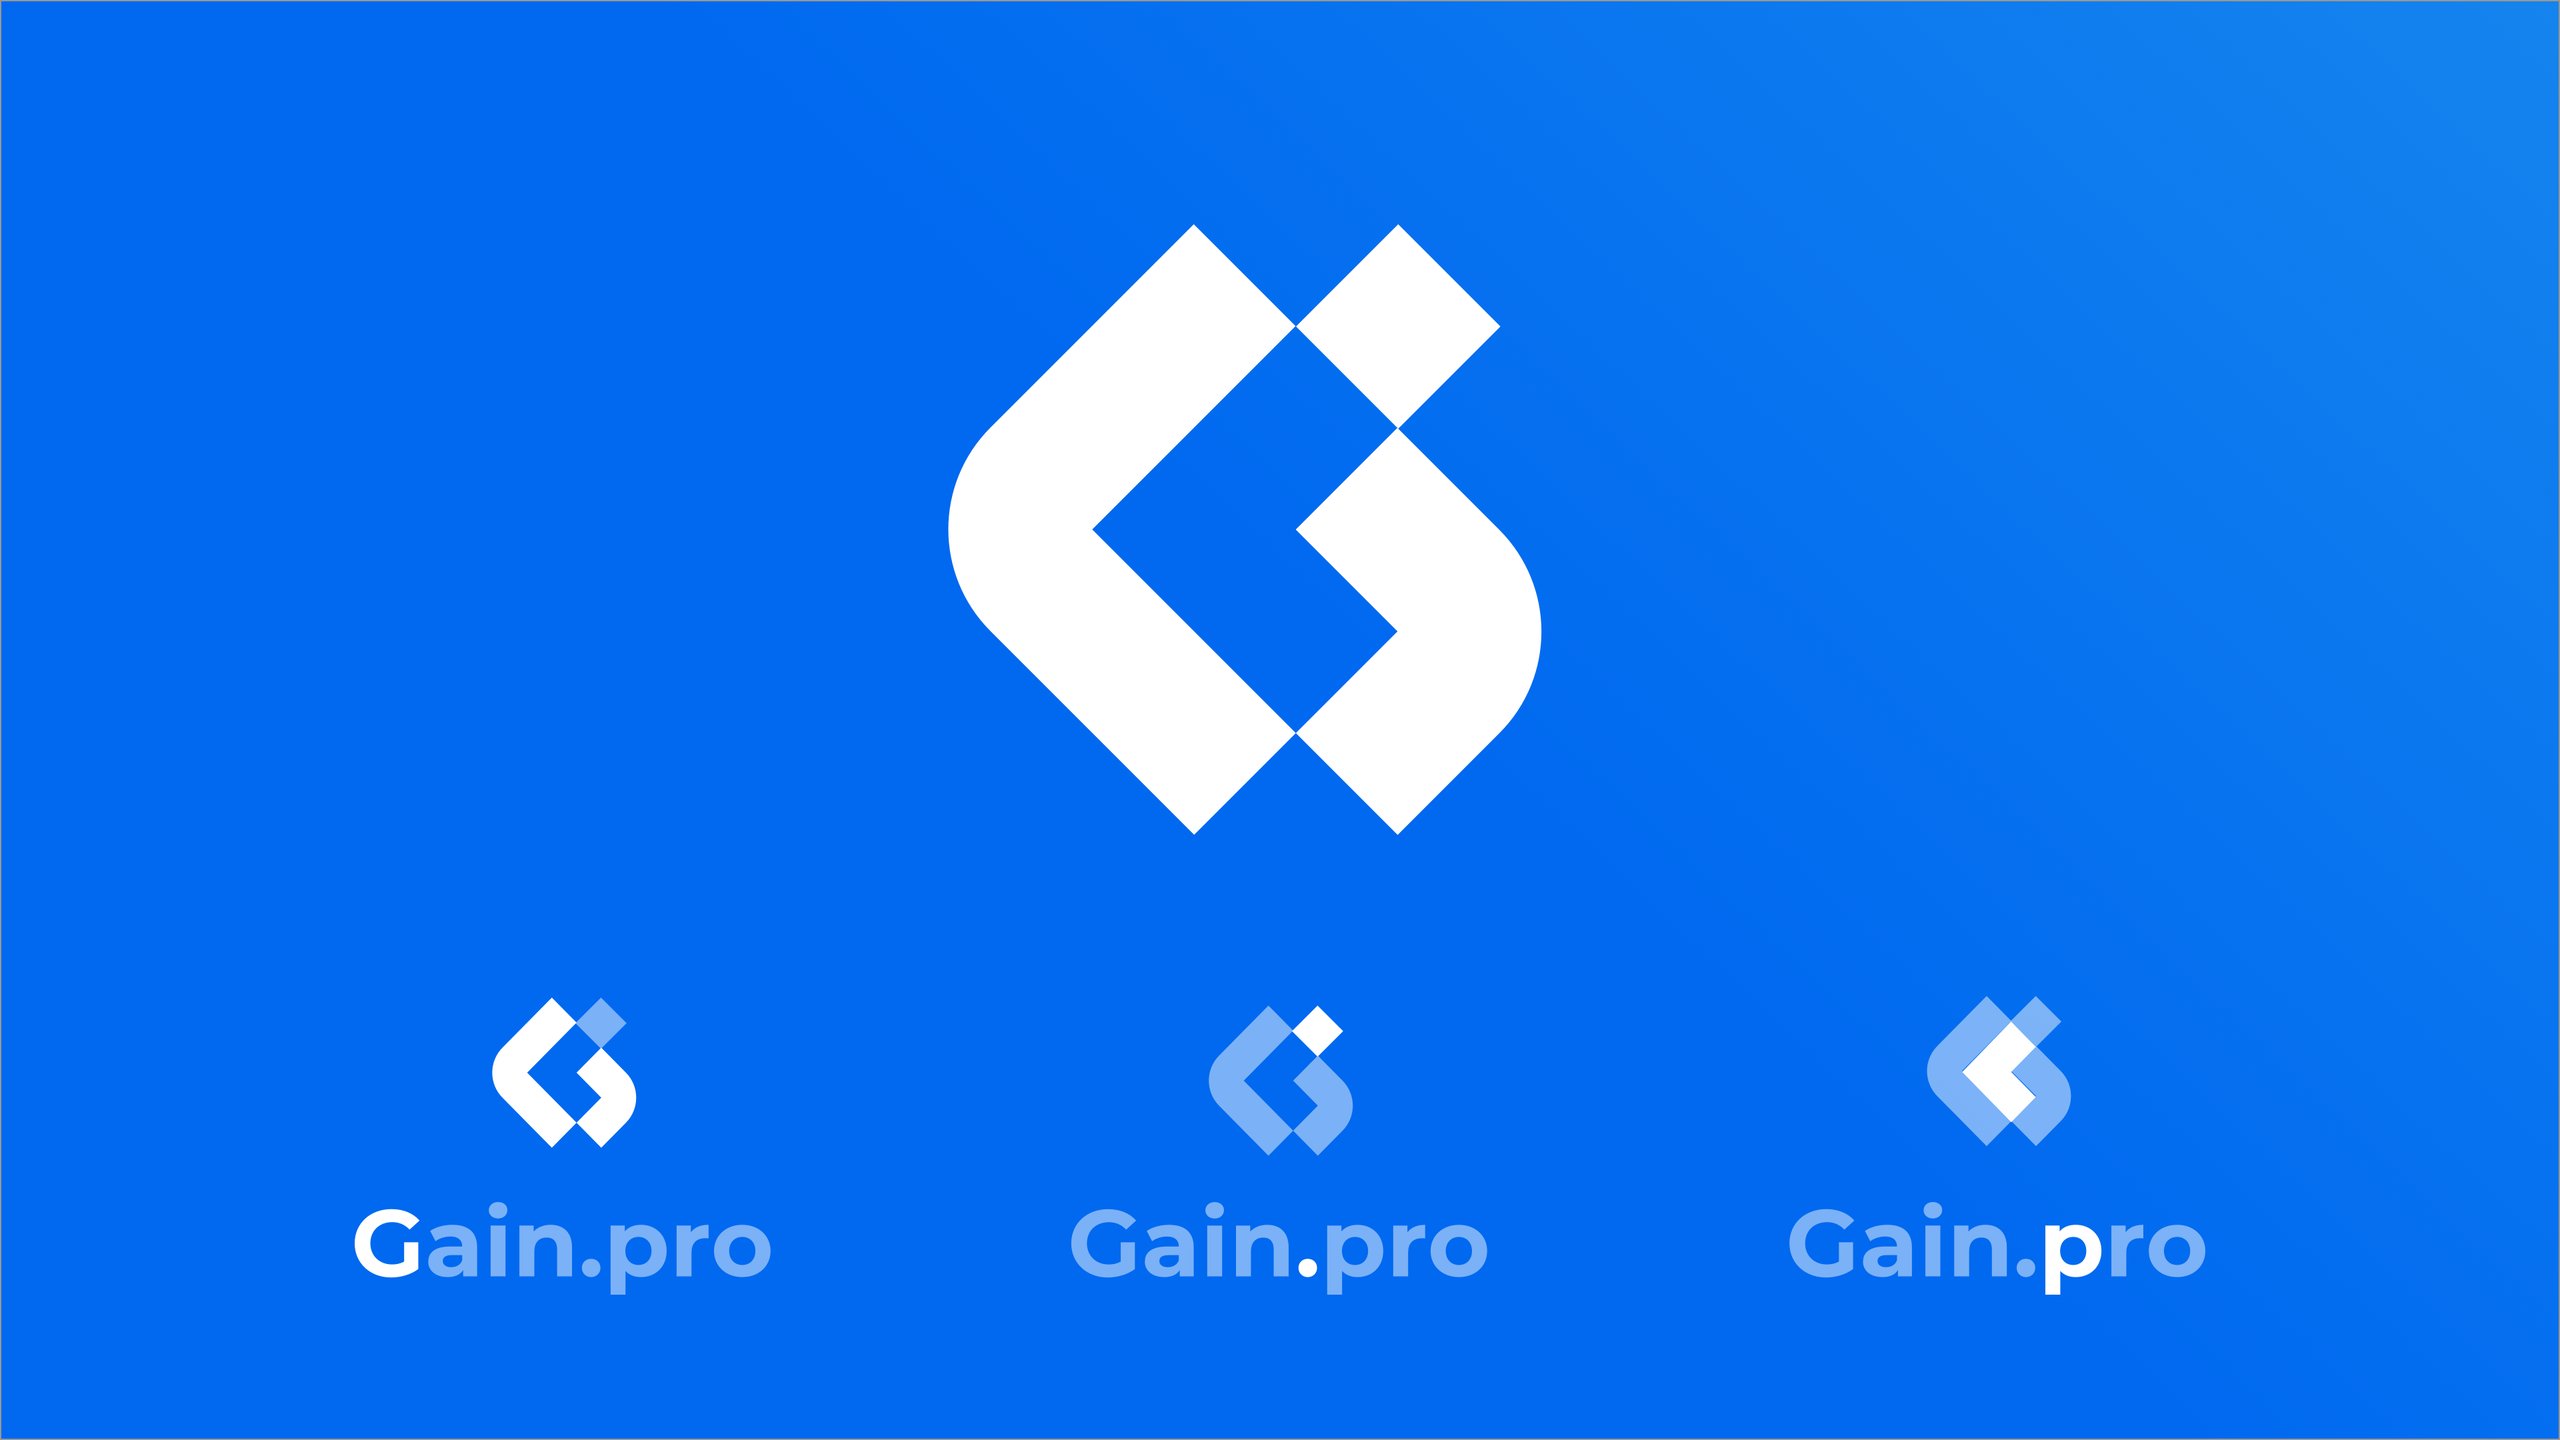 gain.pro logo